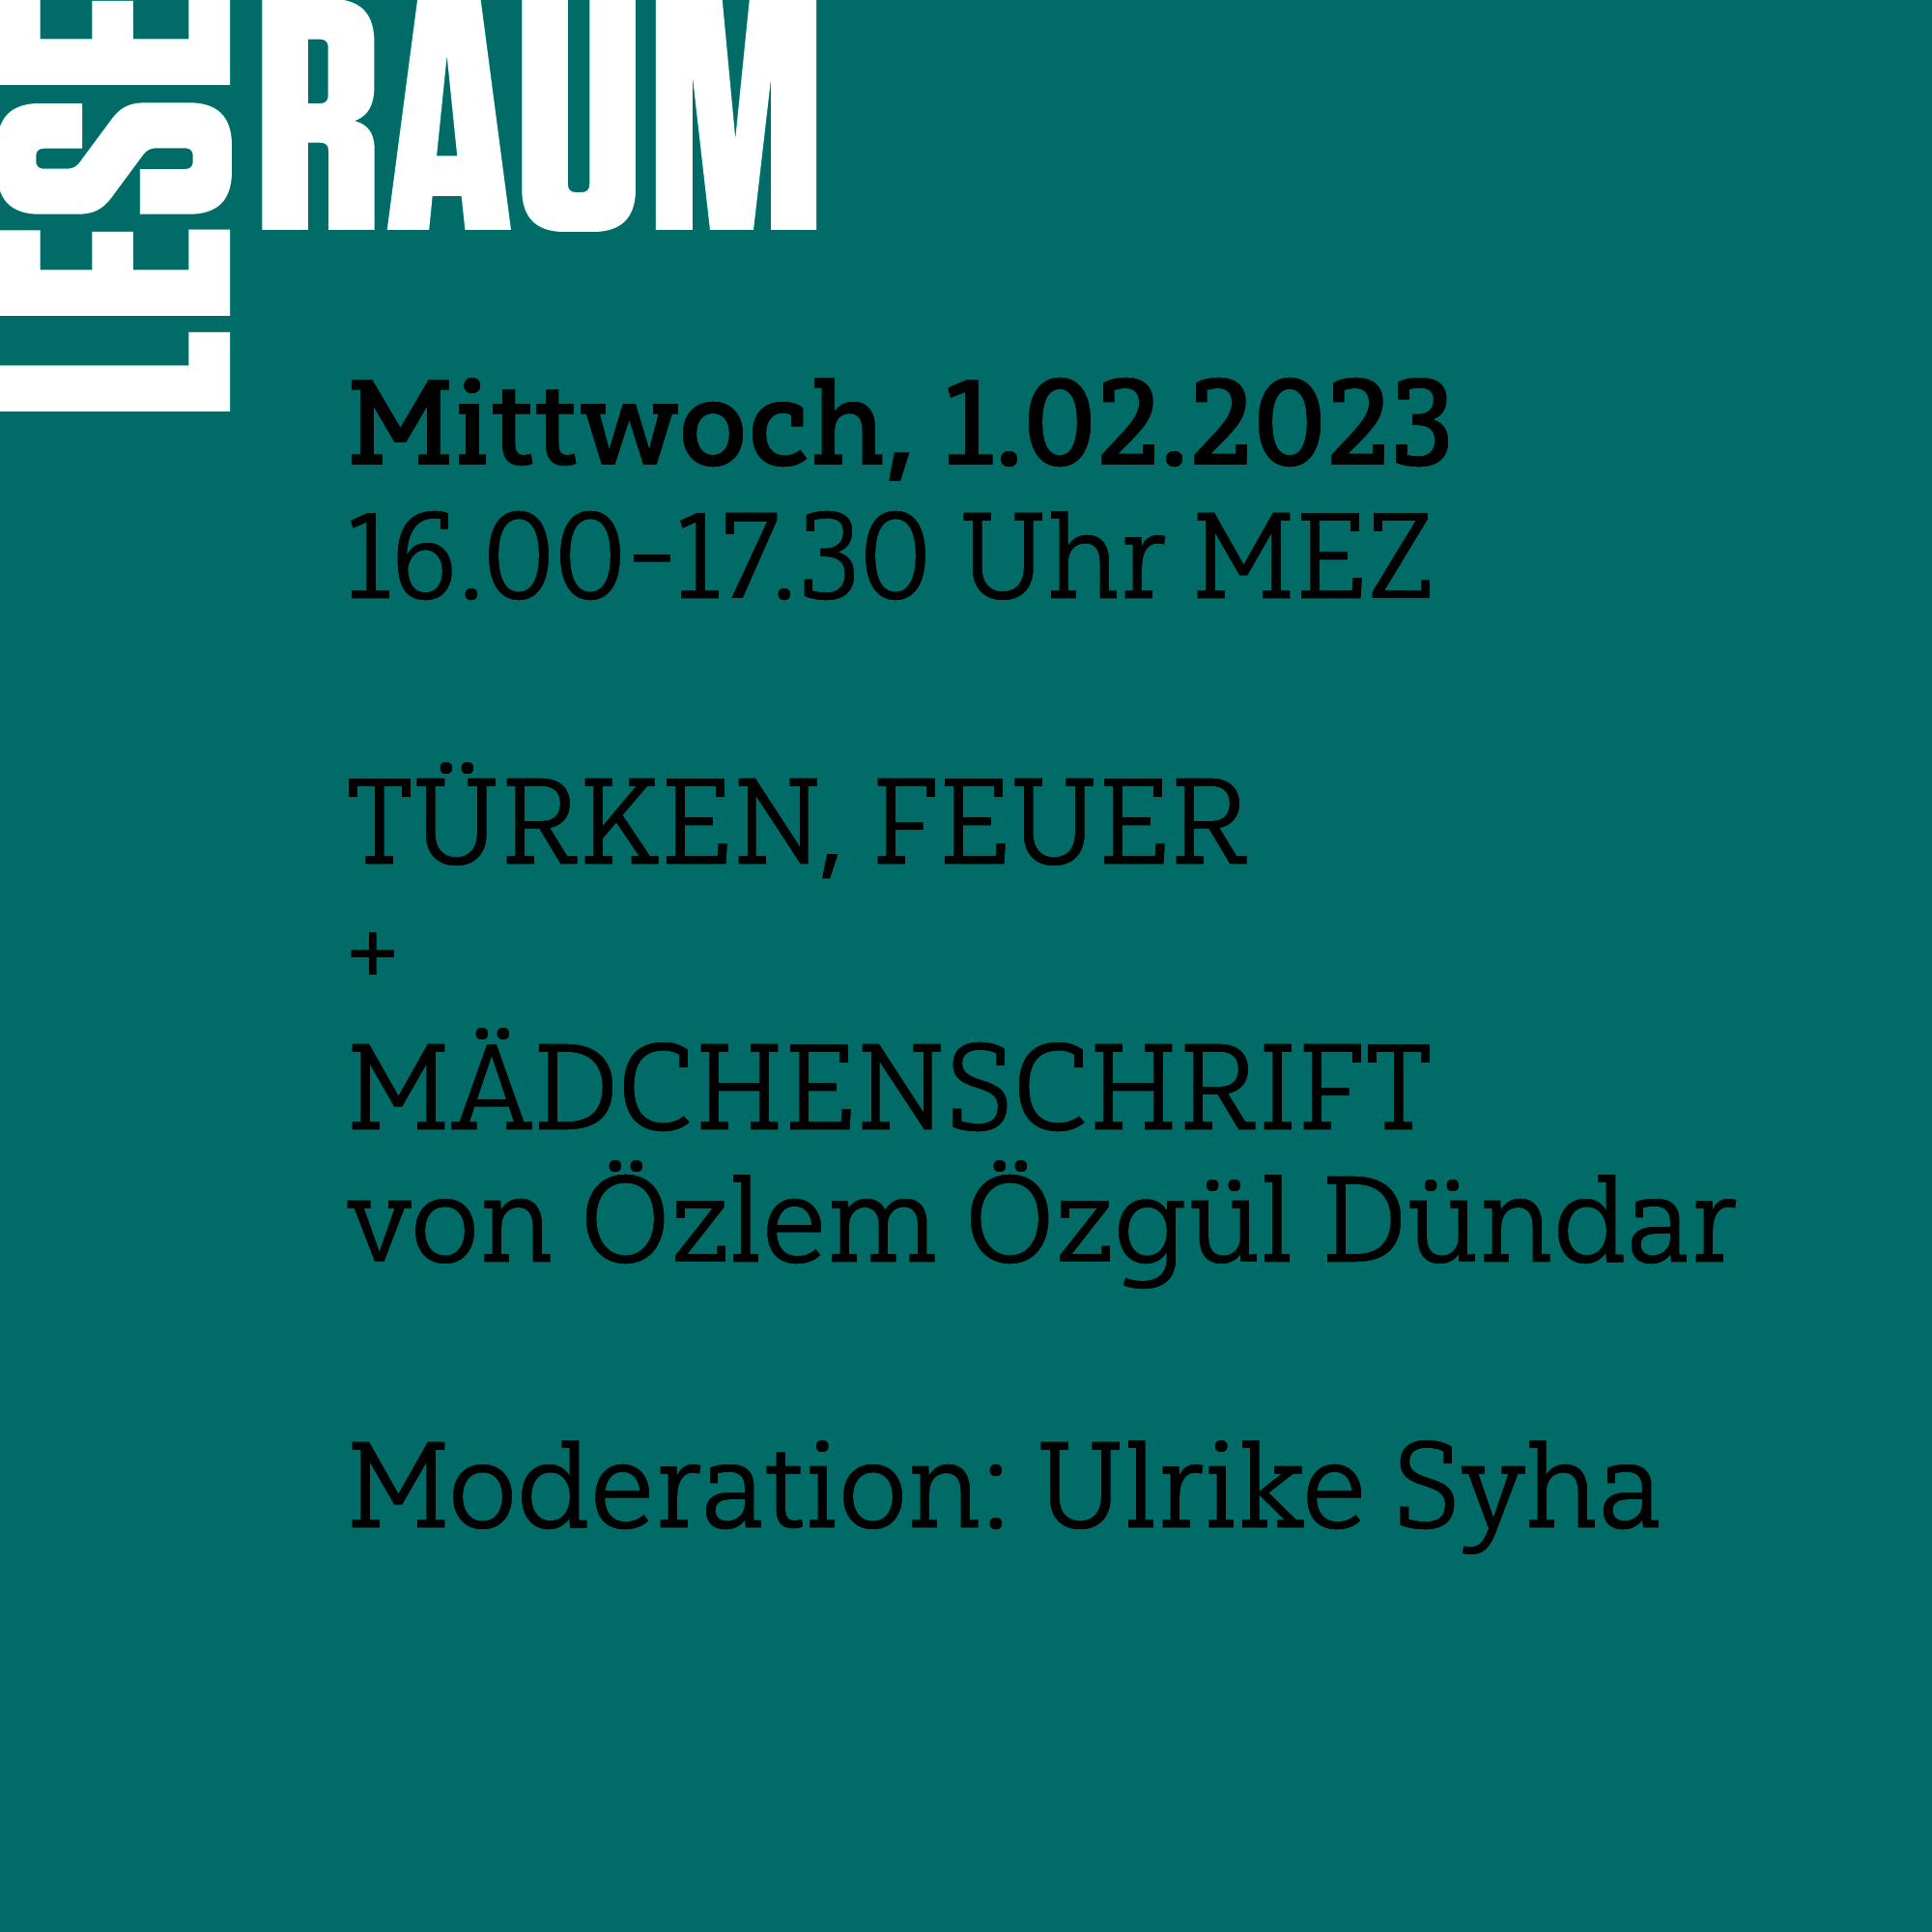 Leseraum #5  01. Februar 2023 16.00 -17.30 Uhr MEZ  türken, feuer  und  Mädchenschrift von Özlem Özgül Dündar